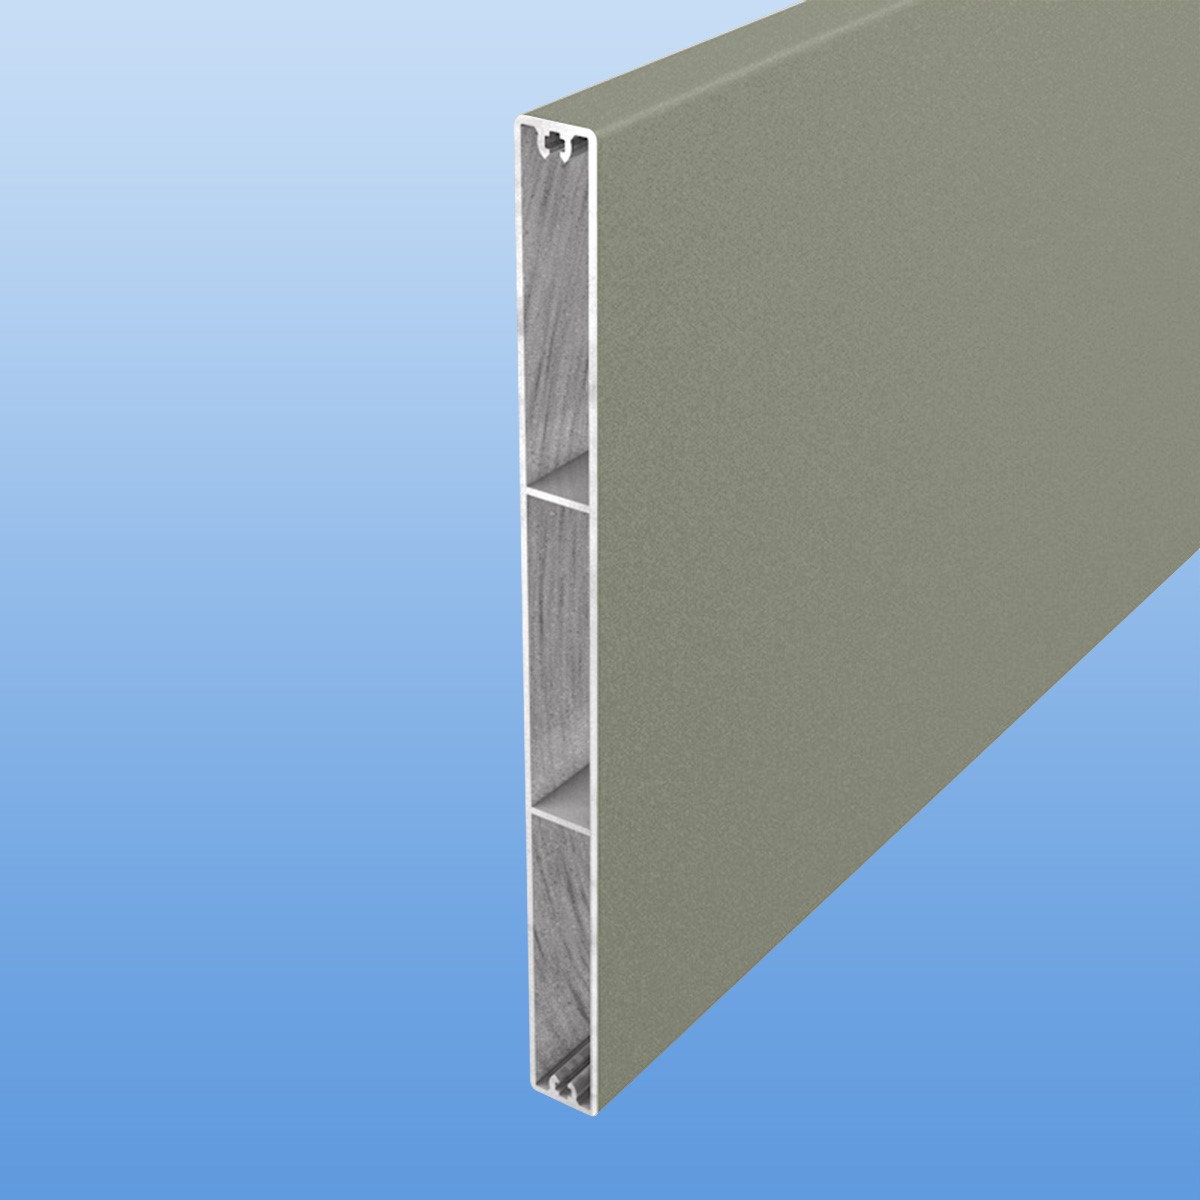 Zaunplanke aus Aluminium 200 mm breit in Grau (RAL 7030)